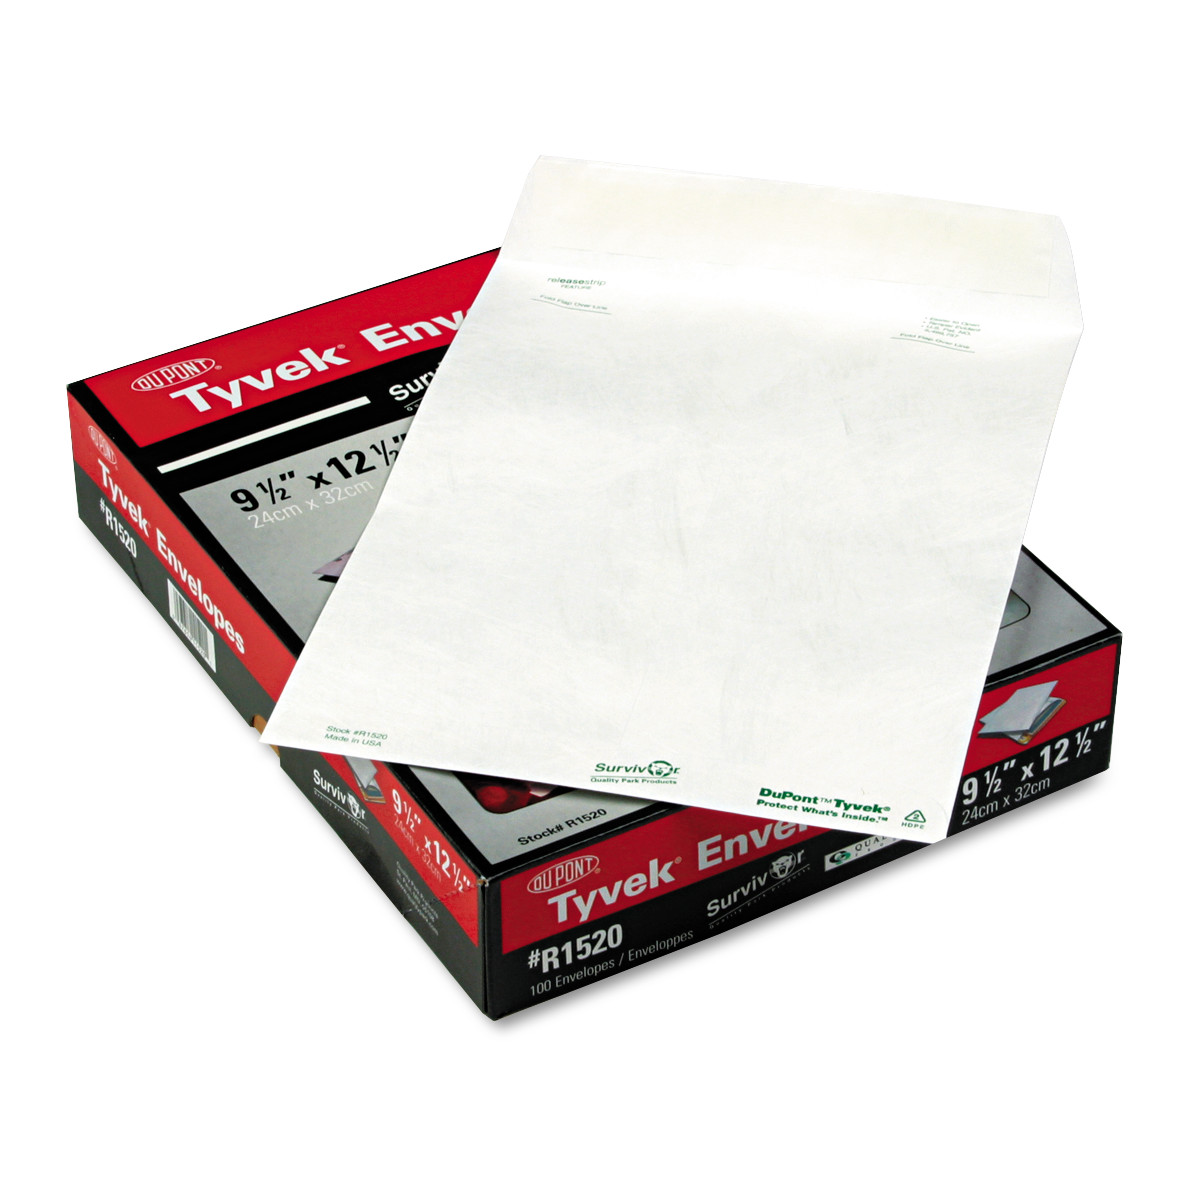 Quality Park Flap-Stik Open-end Envelopes - Catalog - #12 1/2 - 9 1/2" Width x 12 1/2" Length - 14 lb - Peel & Seal - Tyvek - 10